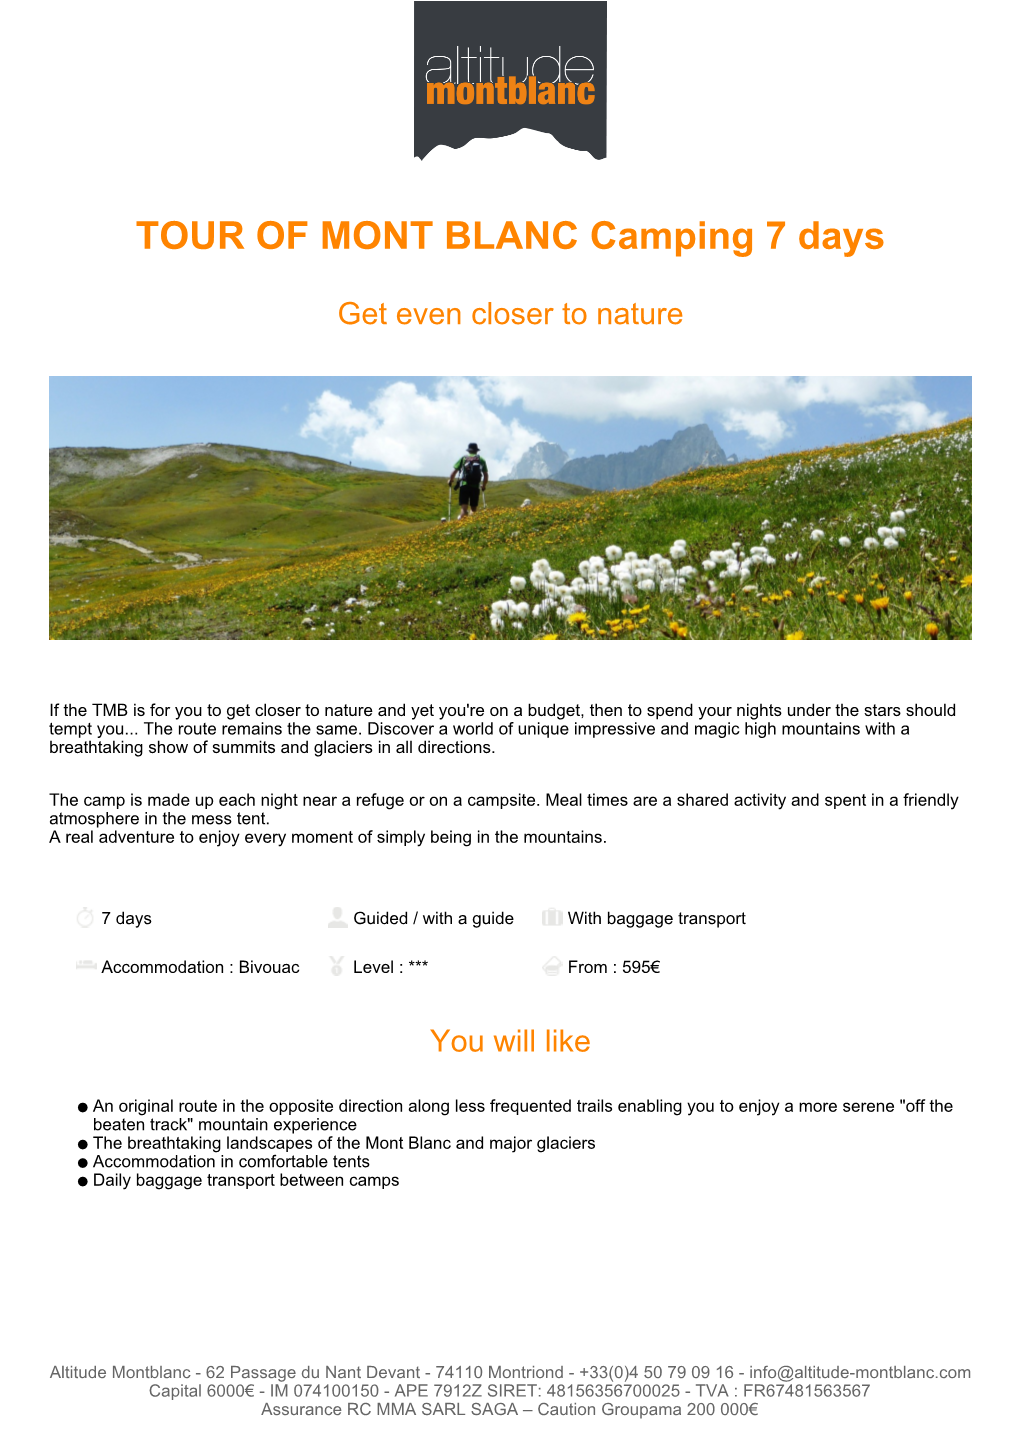 TOUR of MONT BLANC Camping 7 Days